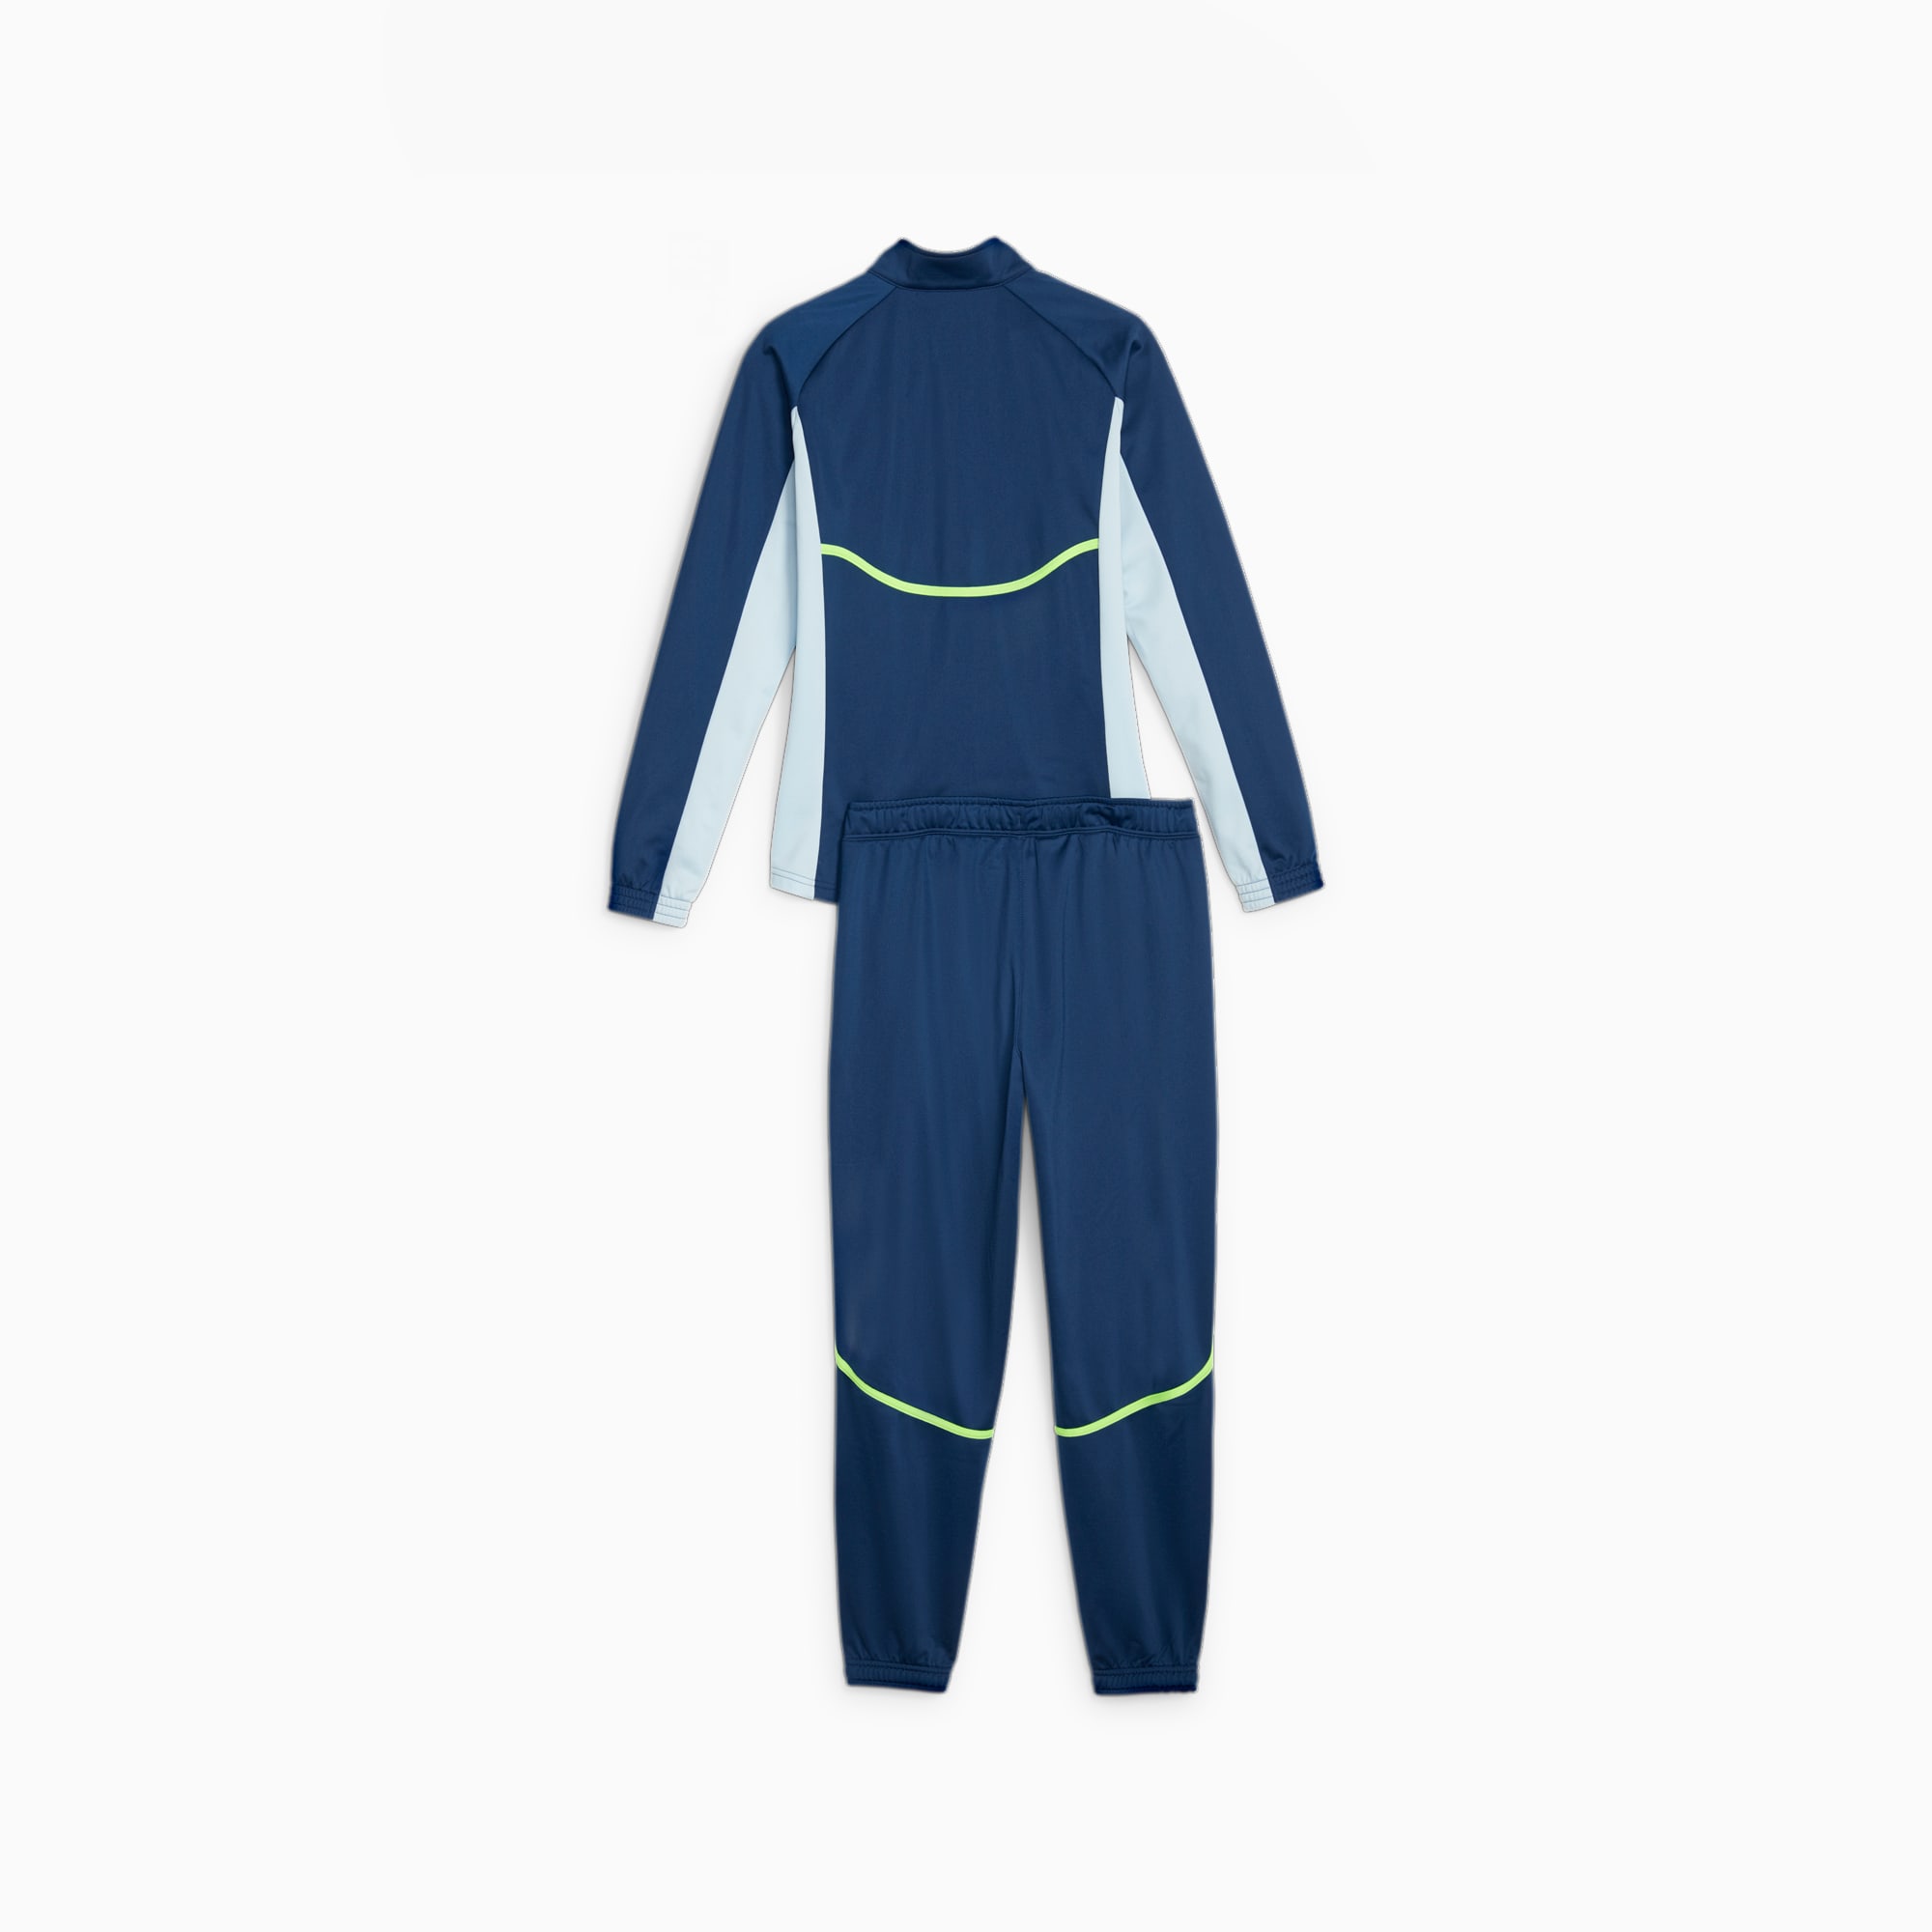 PUMA IndividualBLAZE Fußball Trainingsanzug, Blau/Silber, Größe: S, Kleidung